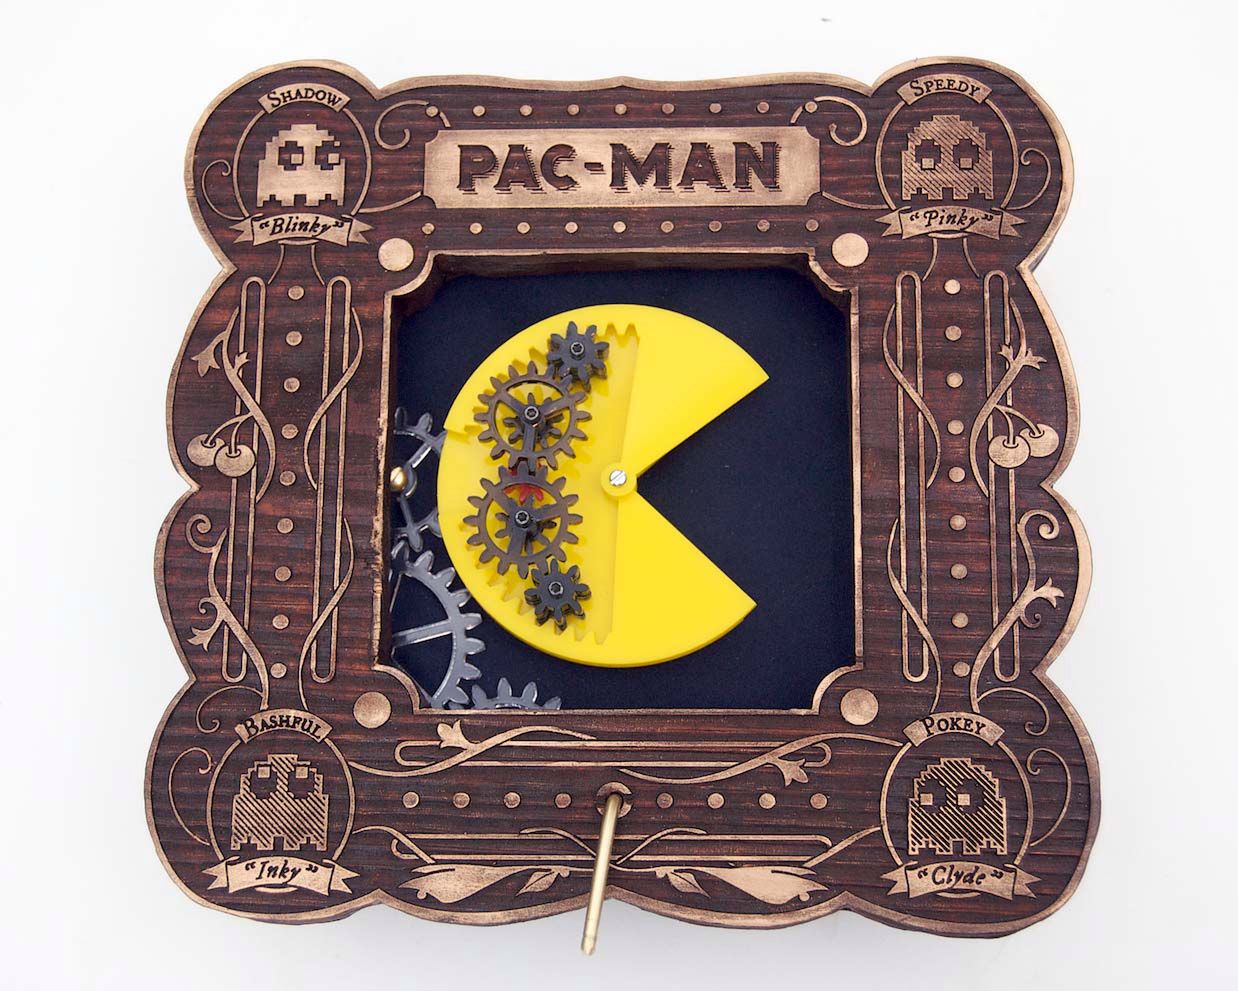 Prototyp Pac-Mana